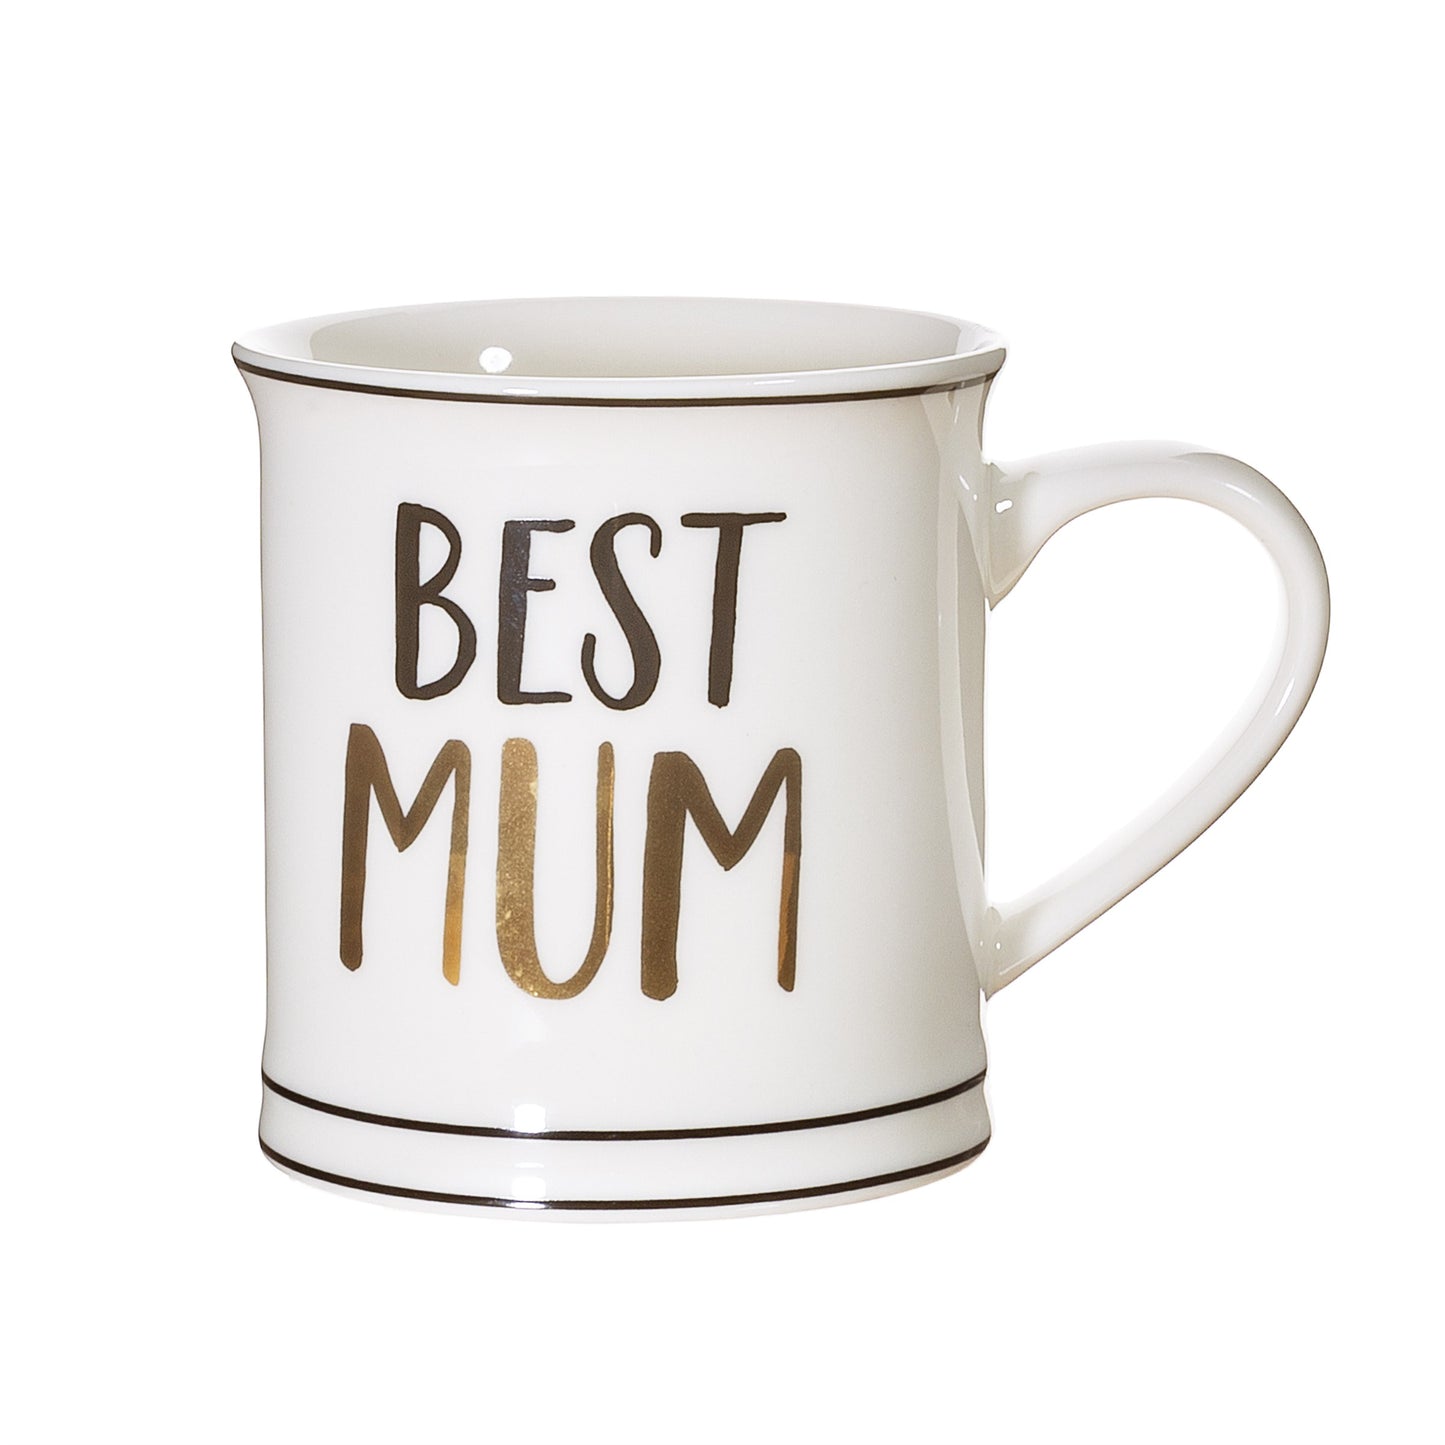 Best Mum Mug - Black & Gold